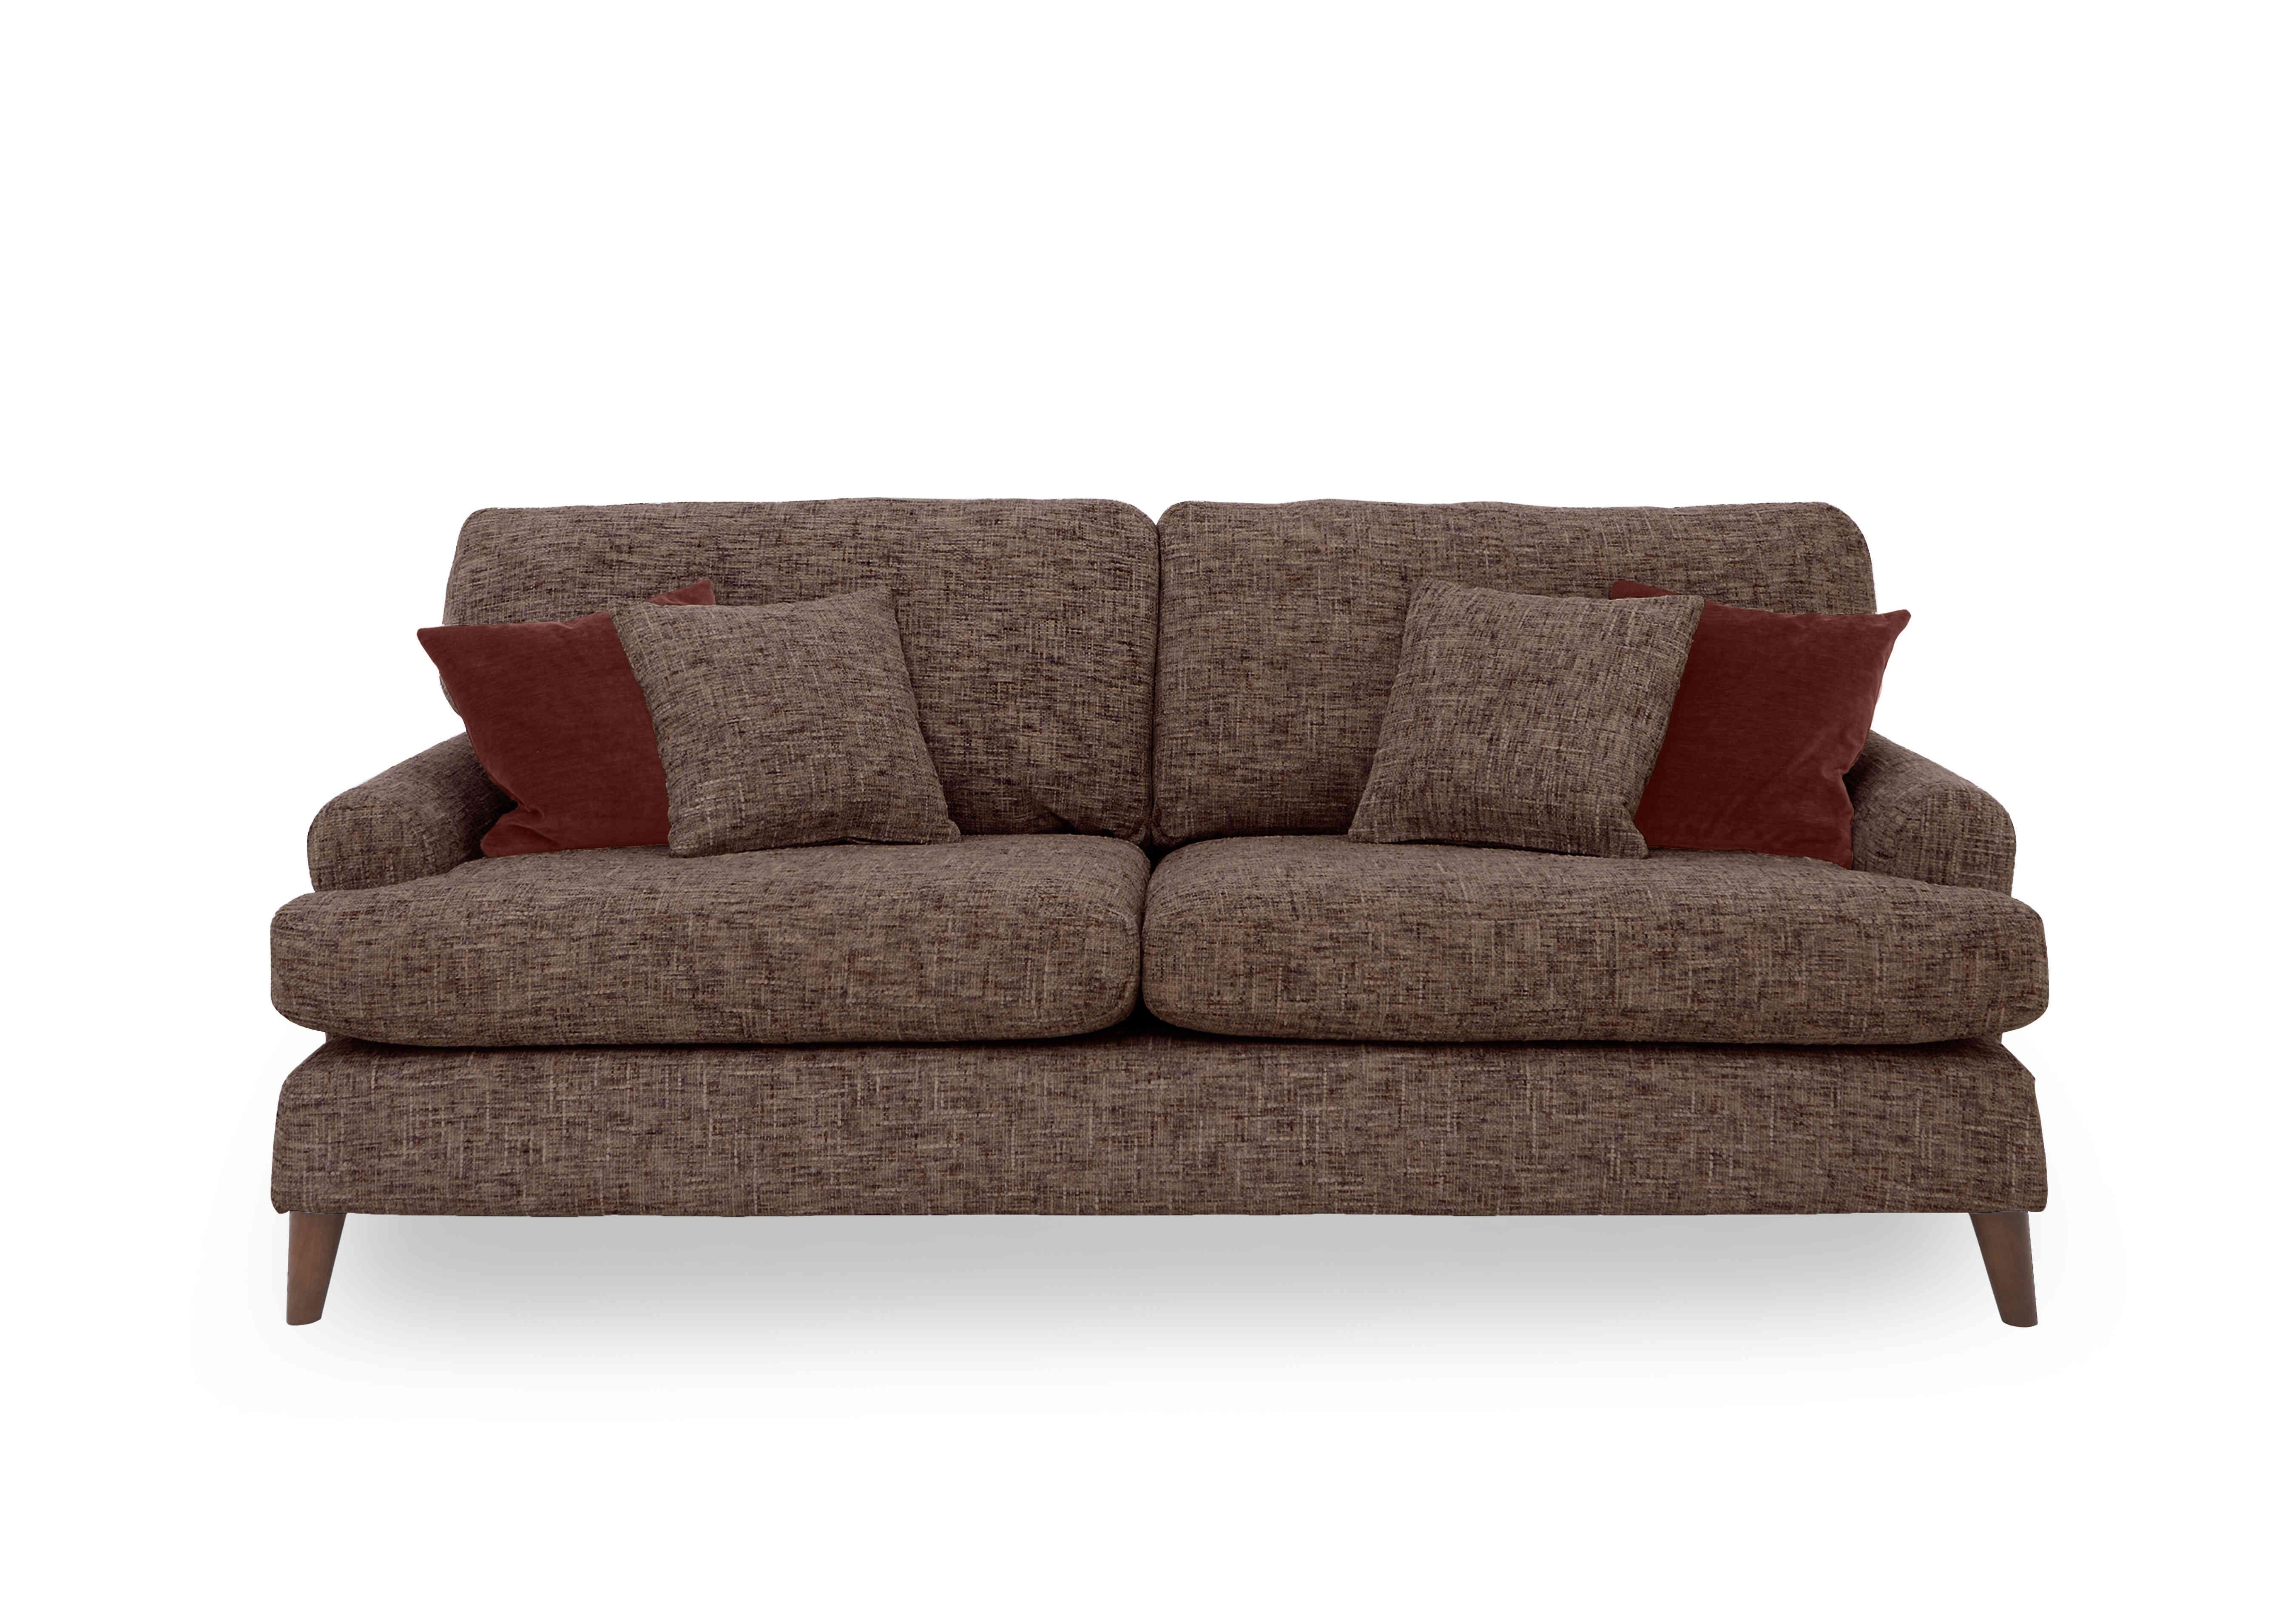 Jackson 4 Seater Fabric Sofa in Copper Blush on Furniture Village